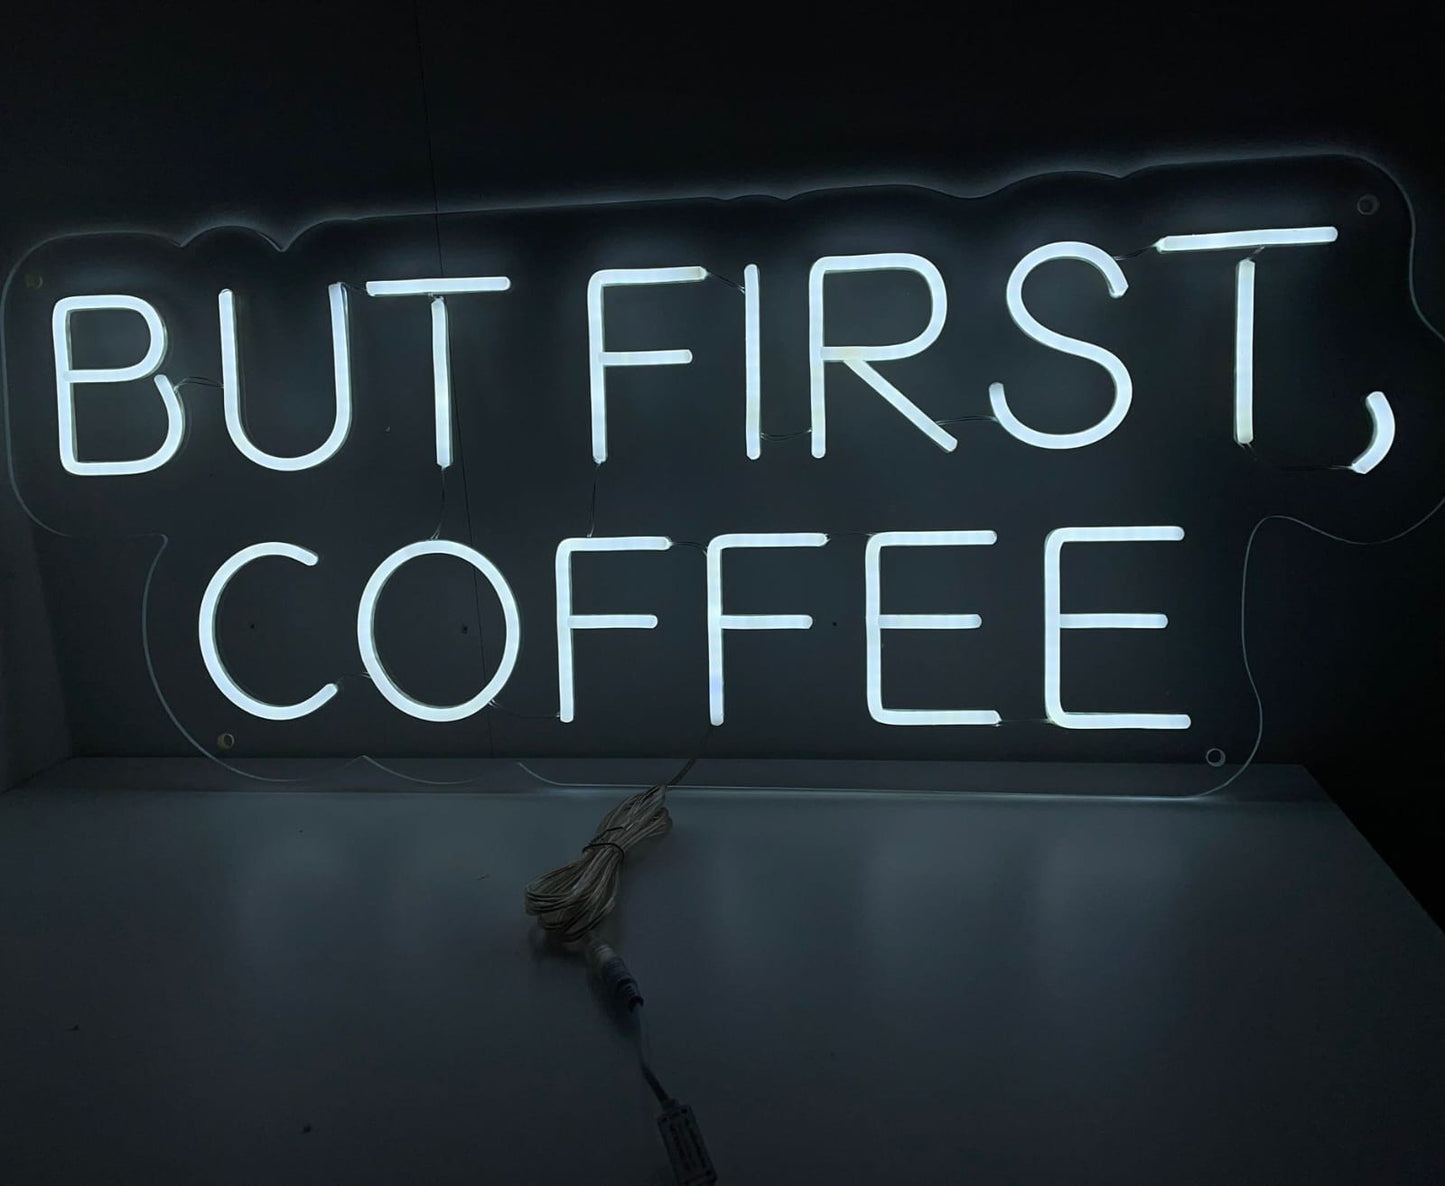 But First, Coffee Φωτεινή επιγραφή